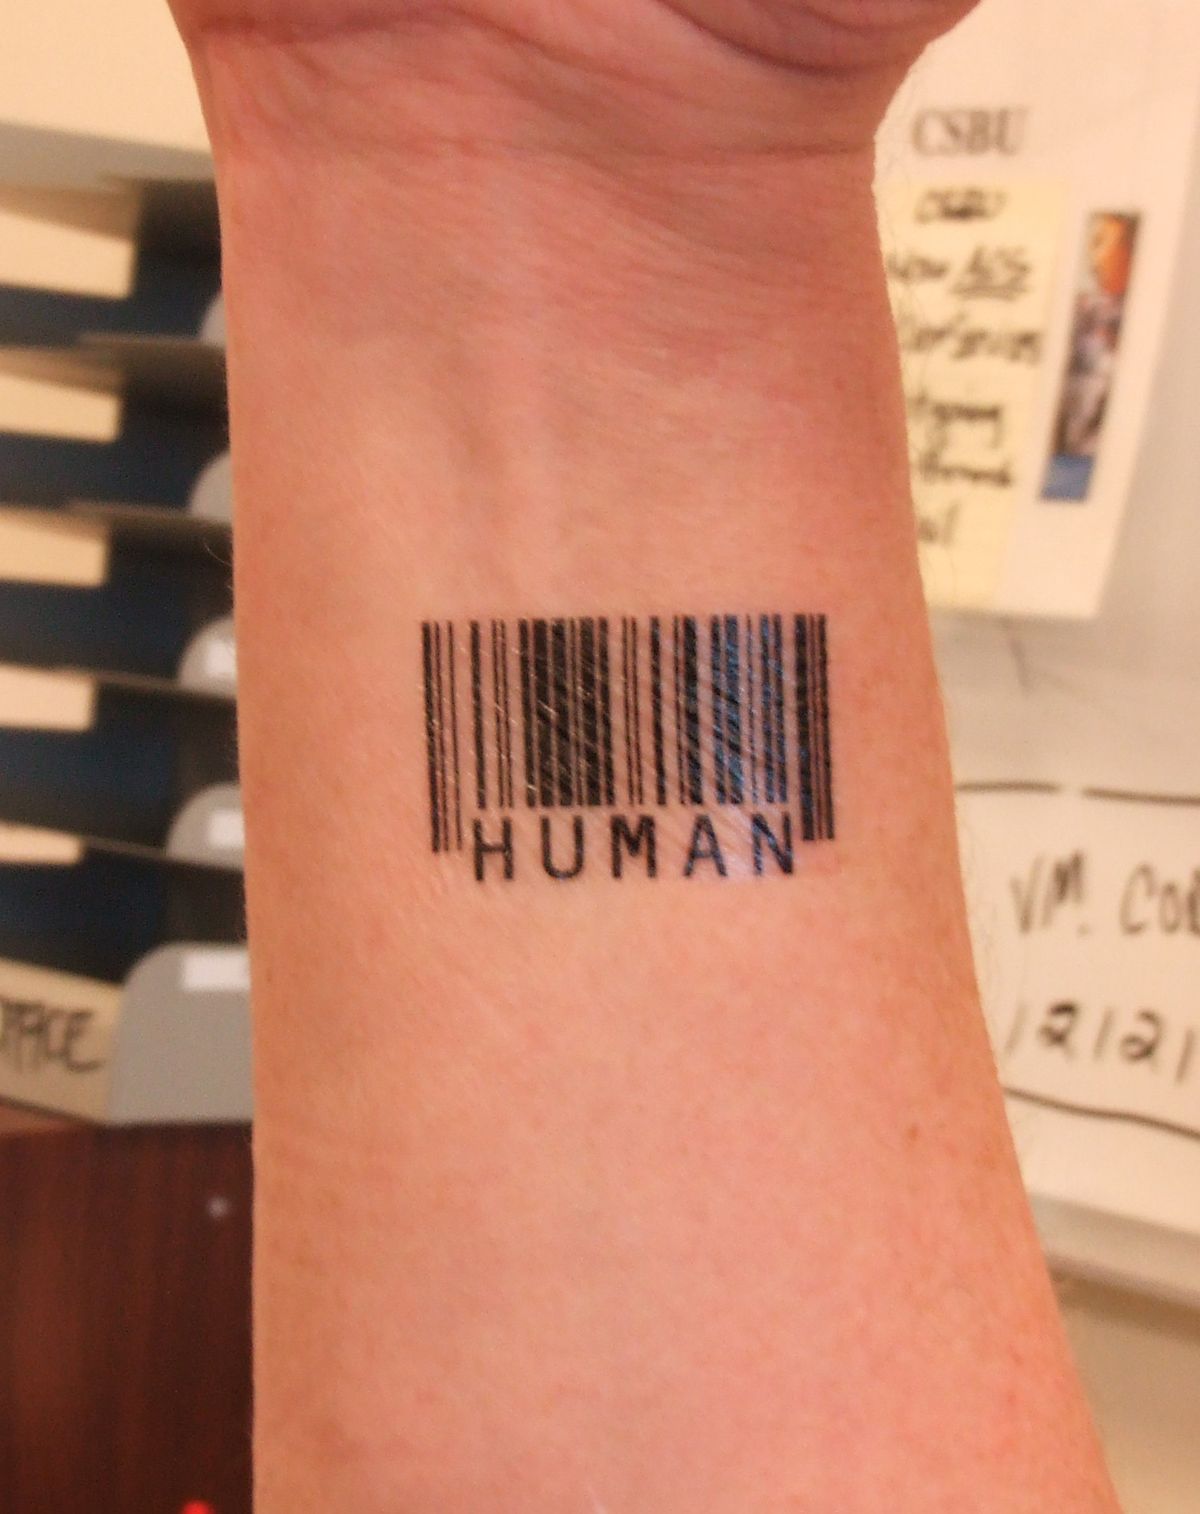 Barcode Tattoos